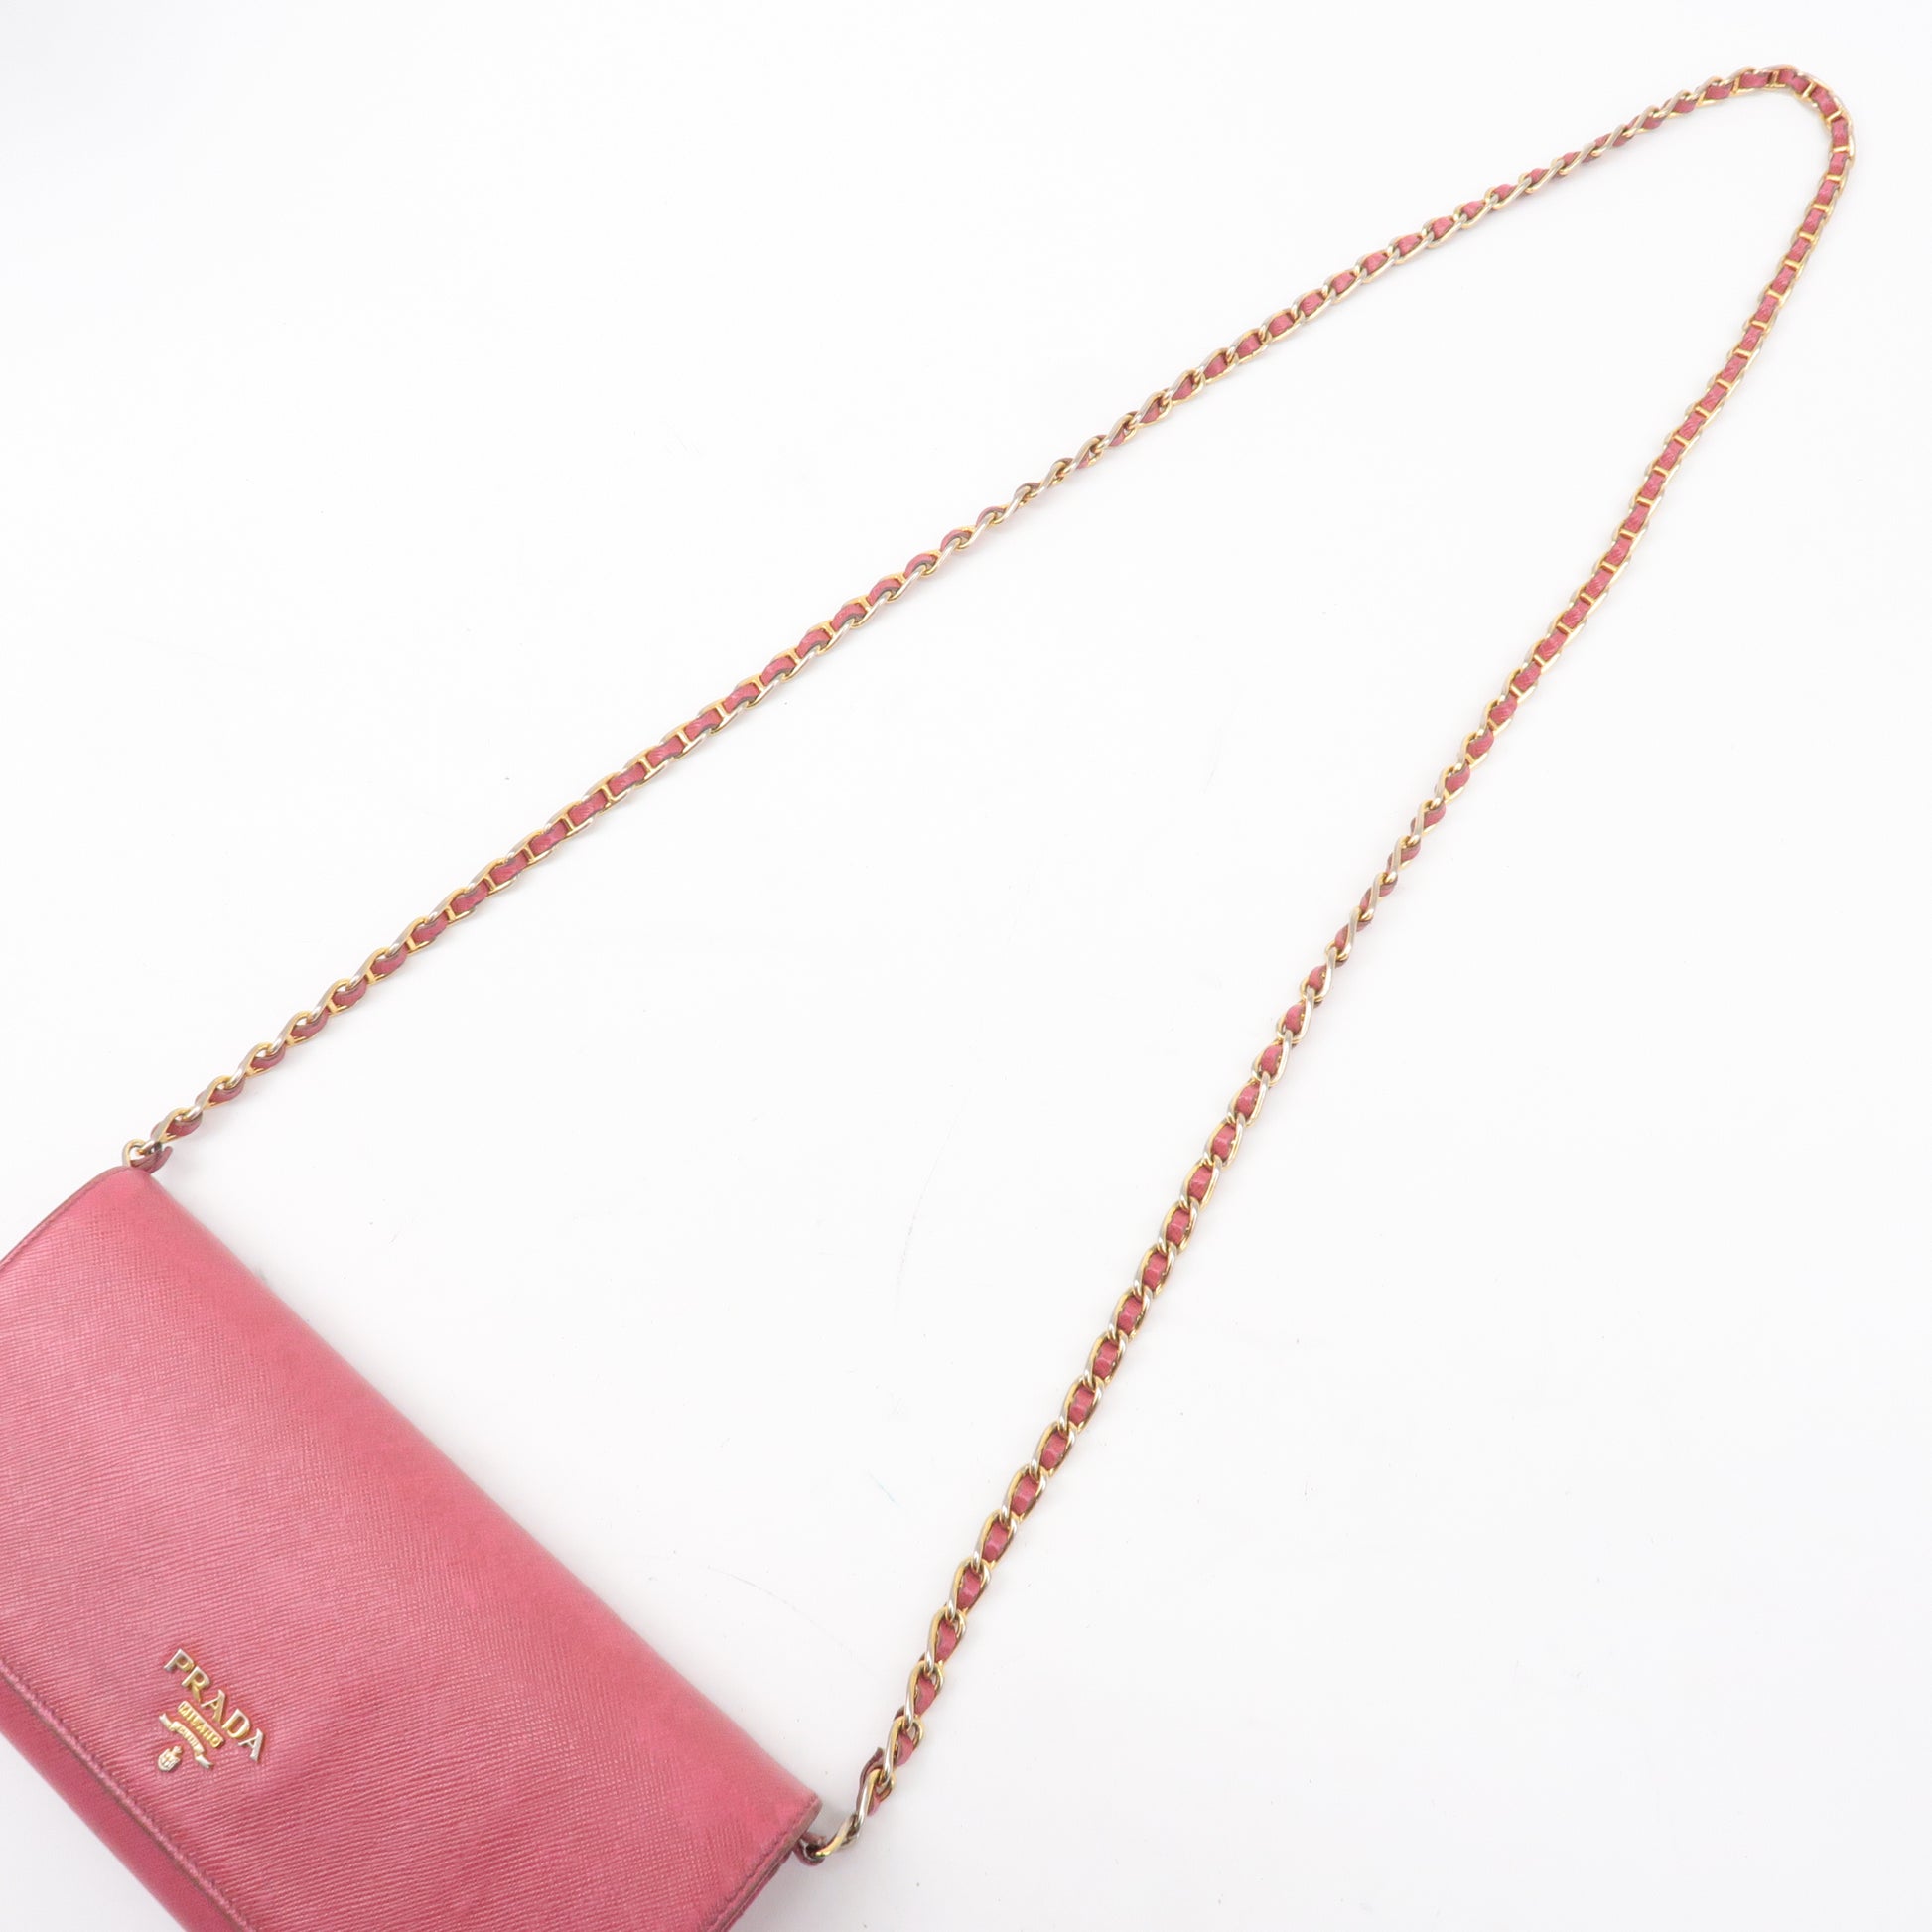 Pink Prada Wallet on Chain